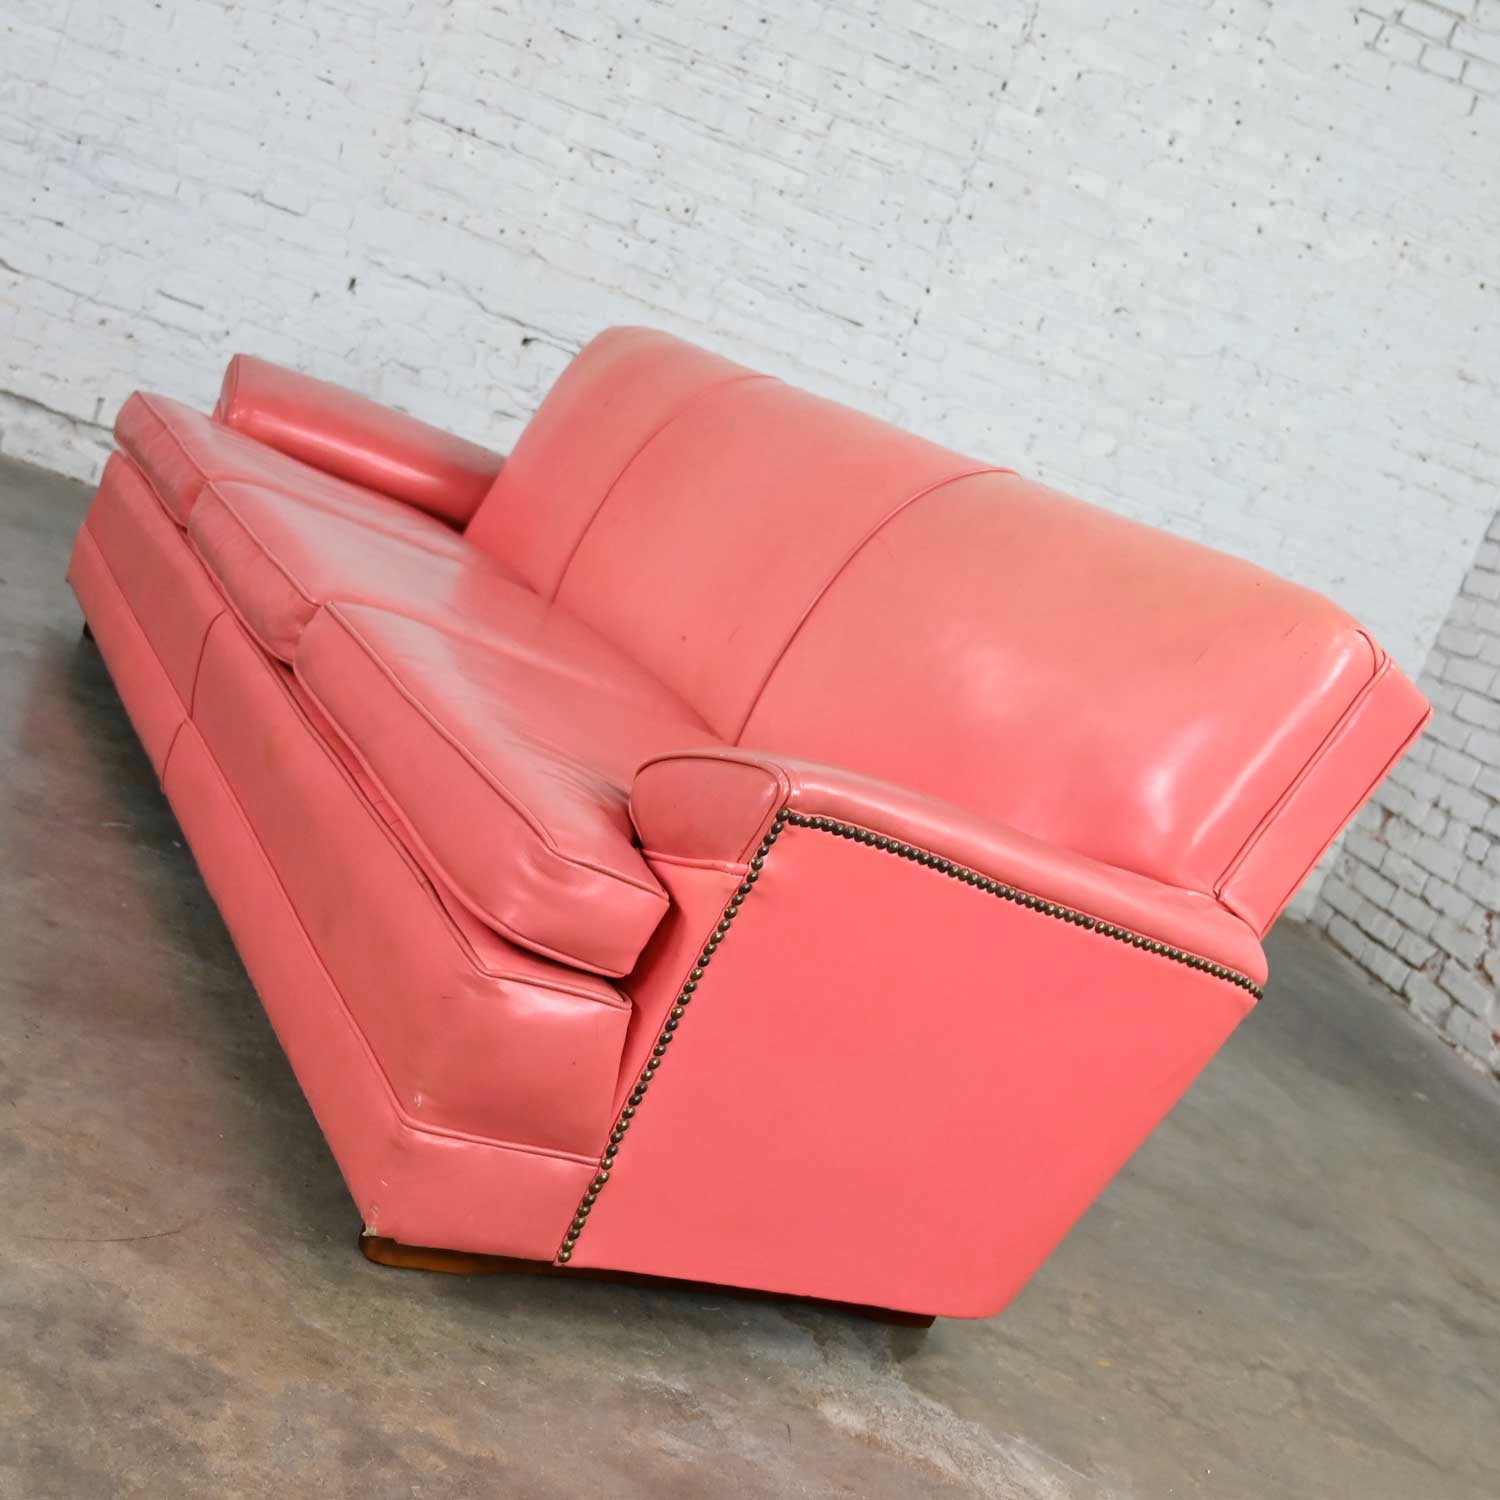 Vintage Hollywood Regency Art Deco Sofa with Original Pink Distressed Leather